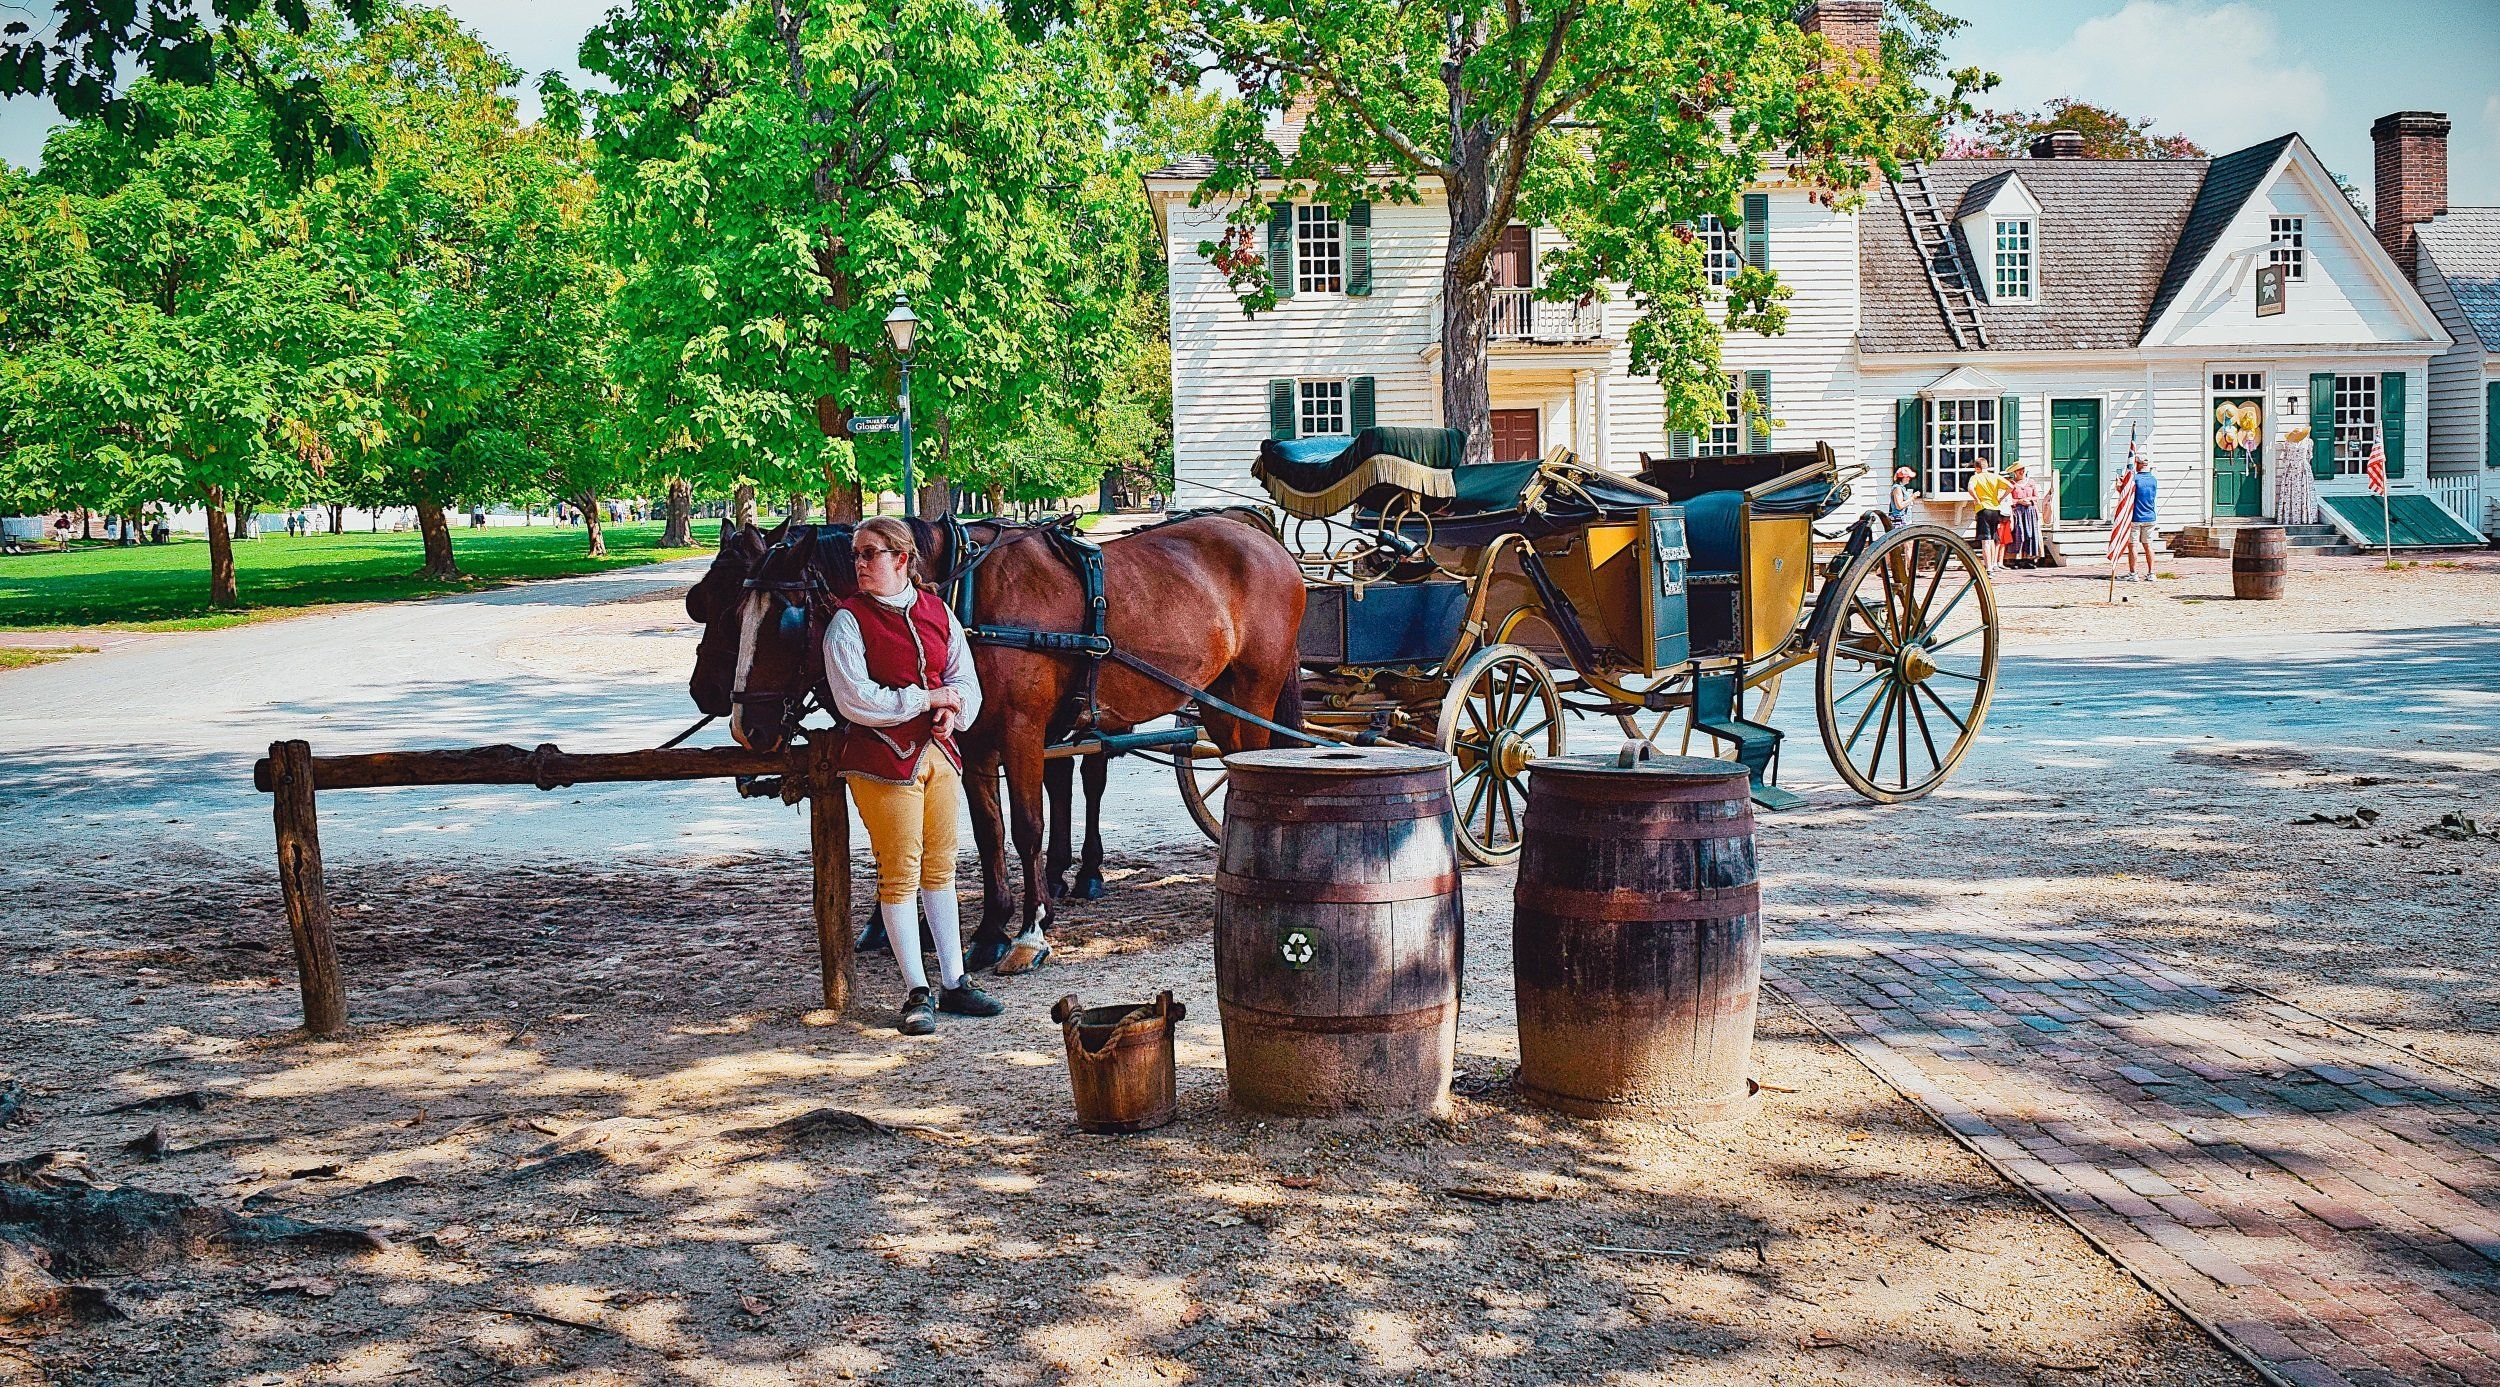 Lovaskocsi Colonial Williamsburgban, az USA-ban